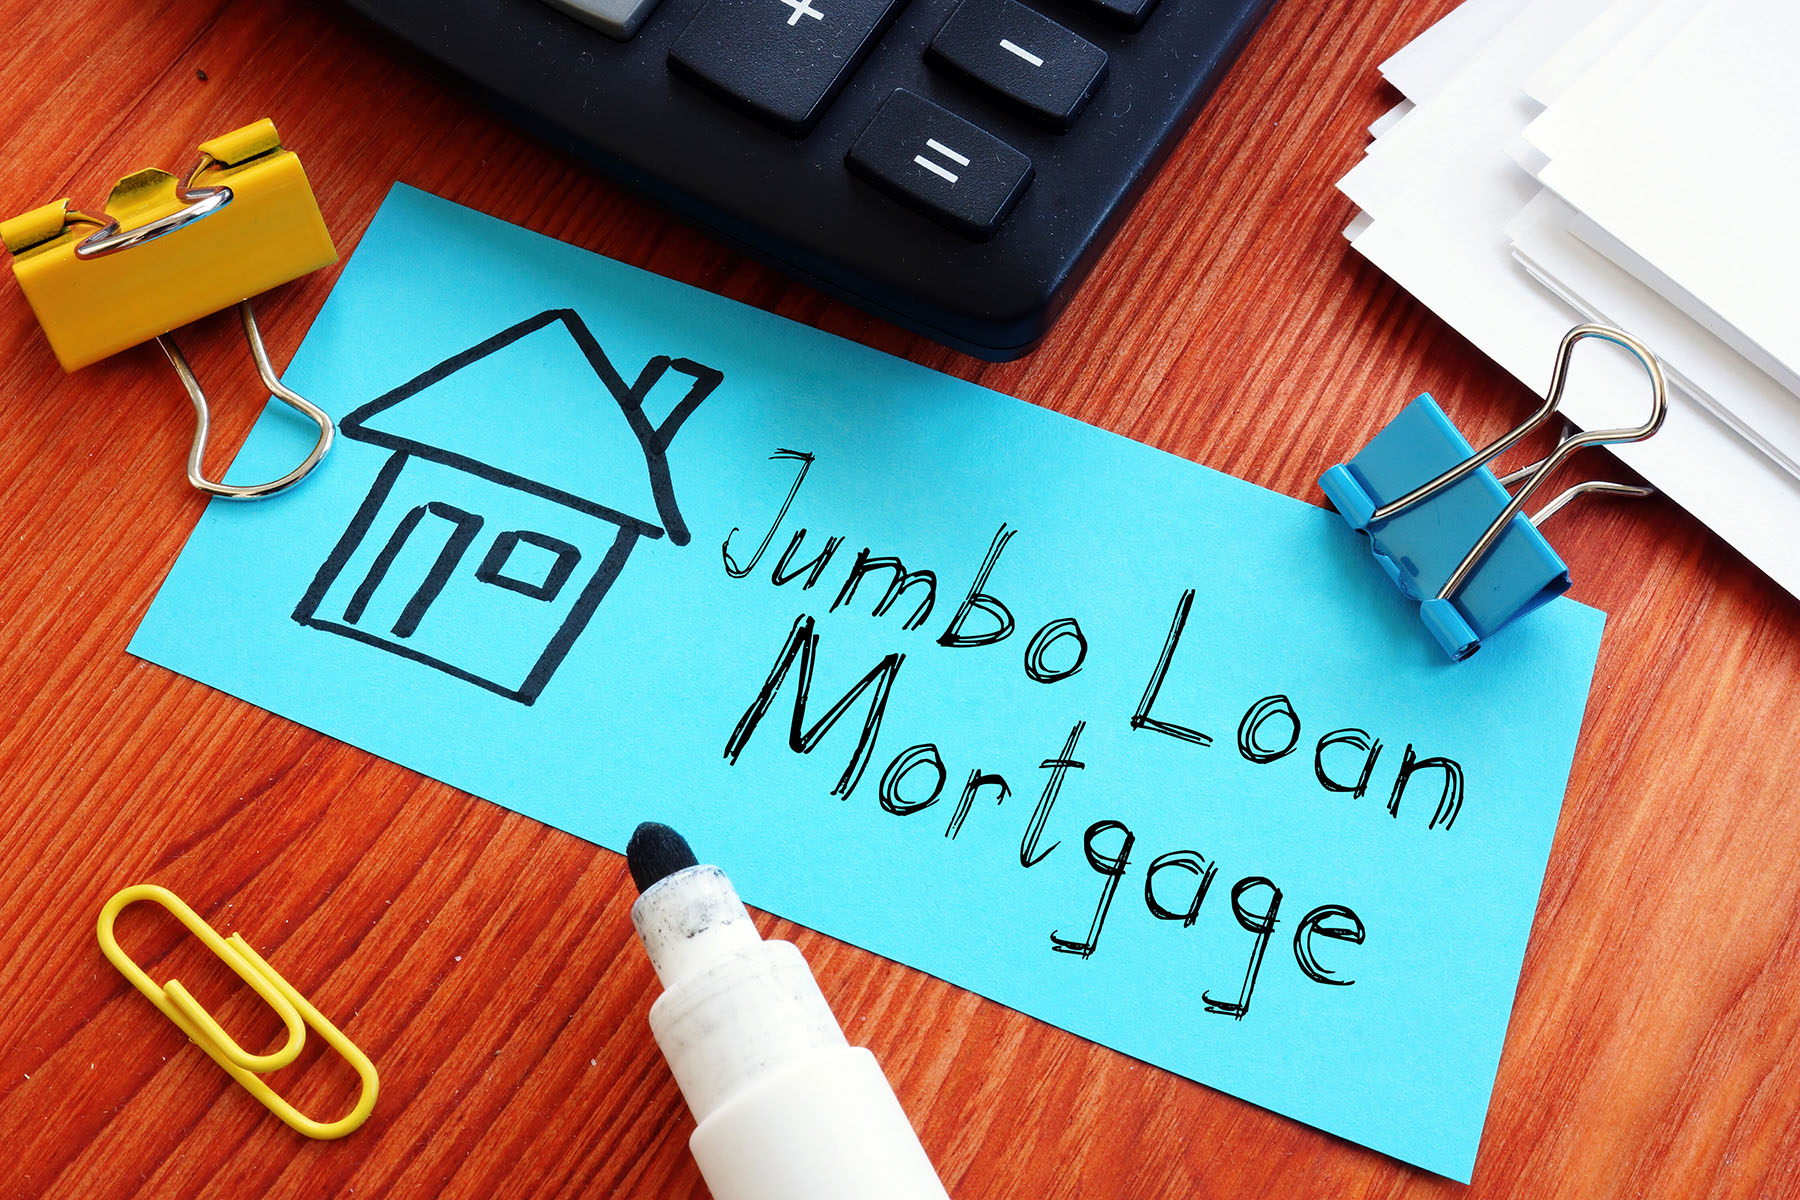 What Is a Jumbo Loan?